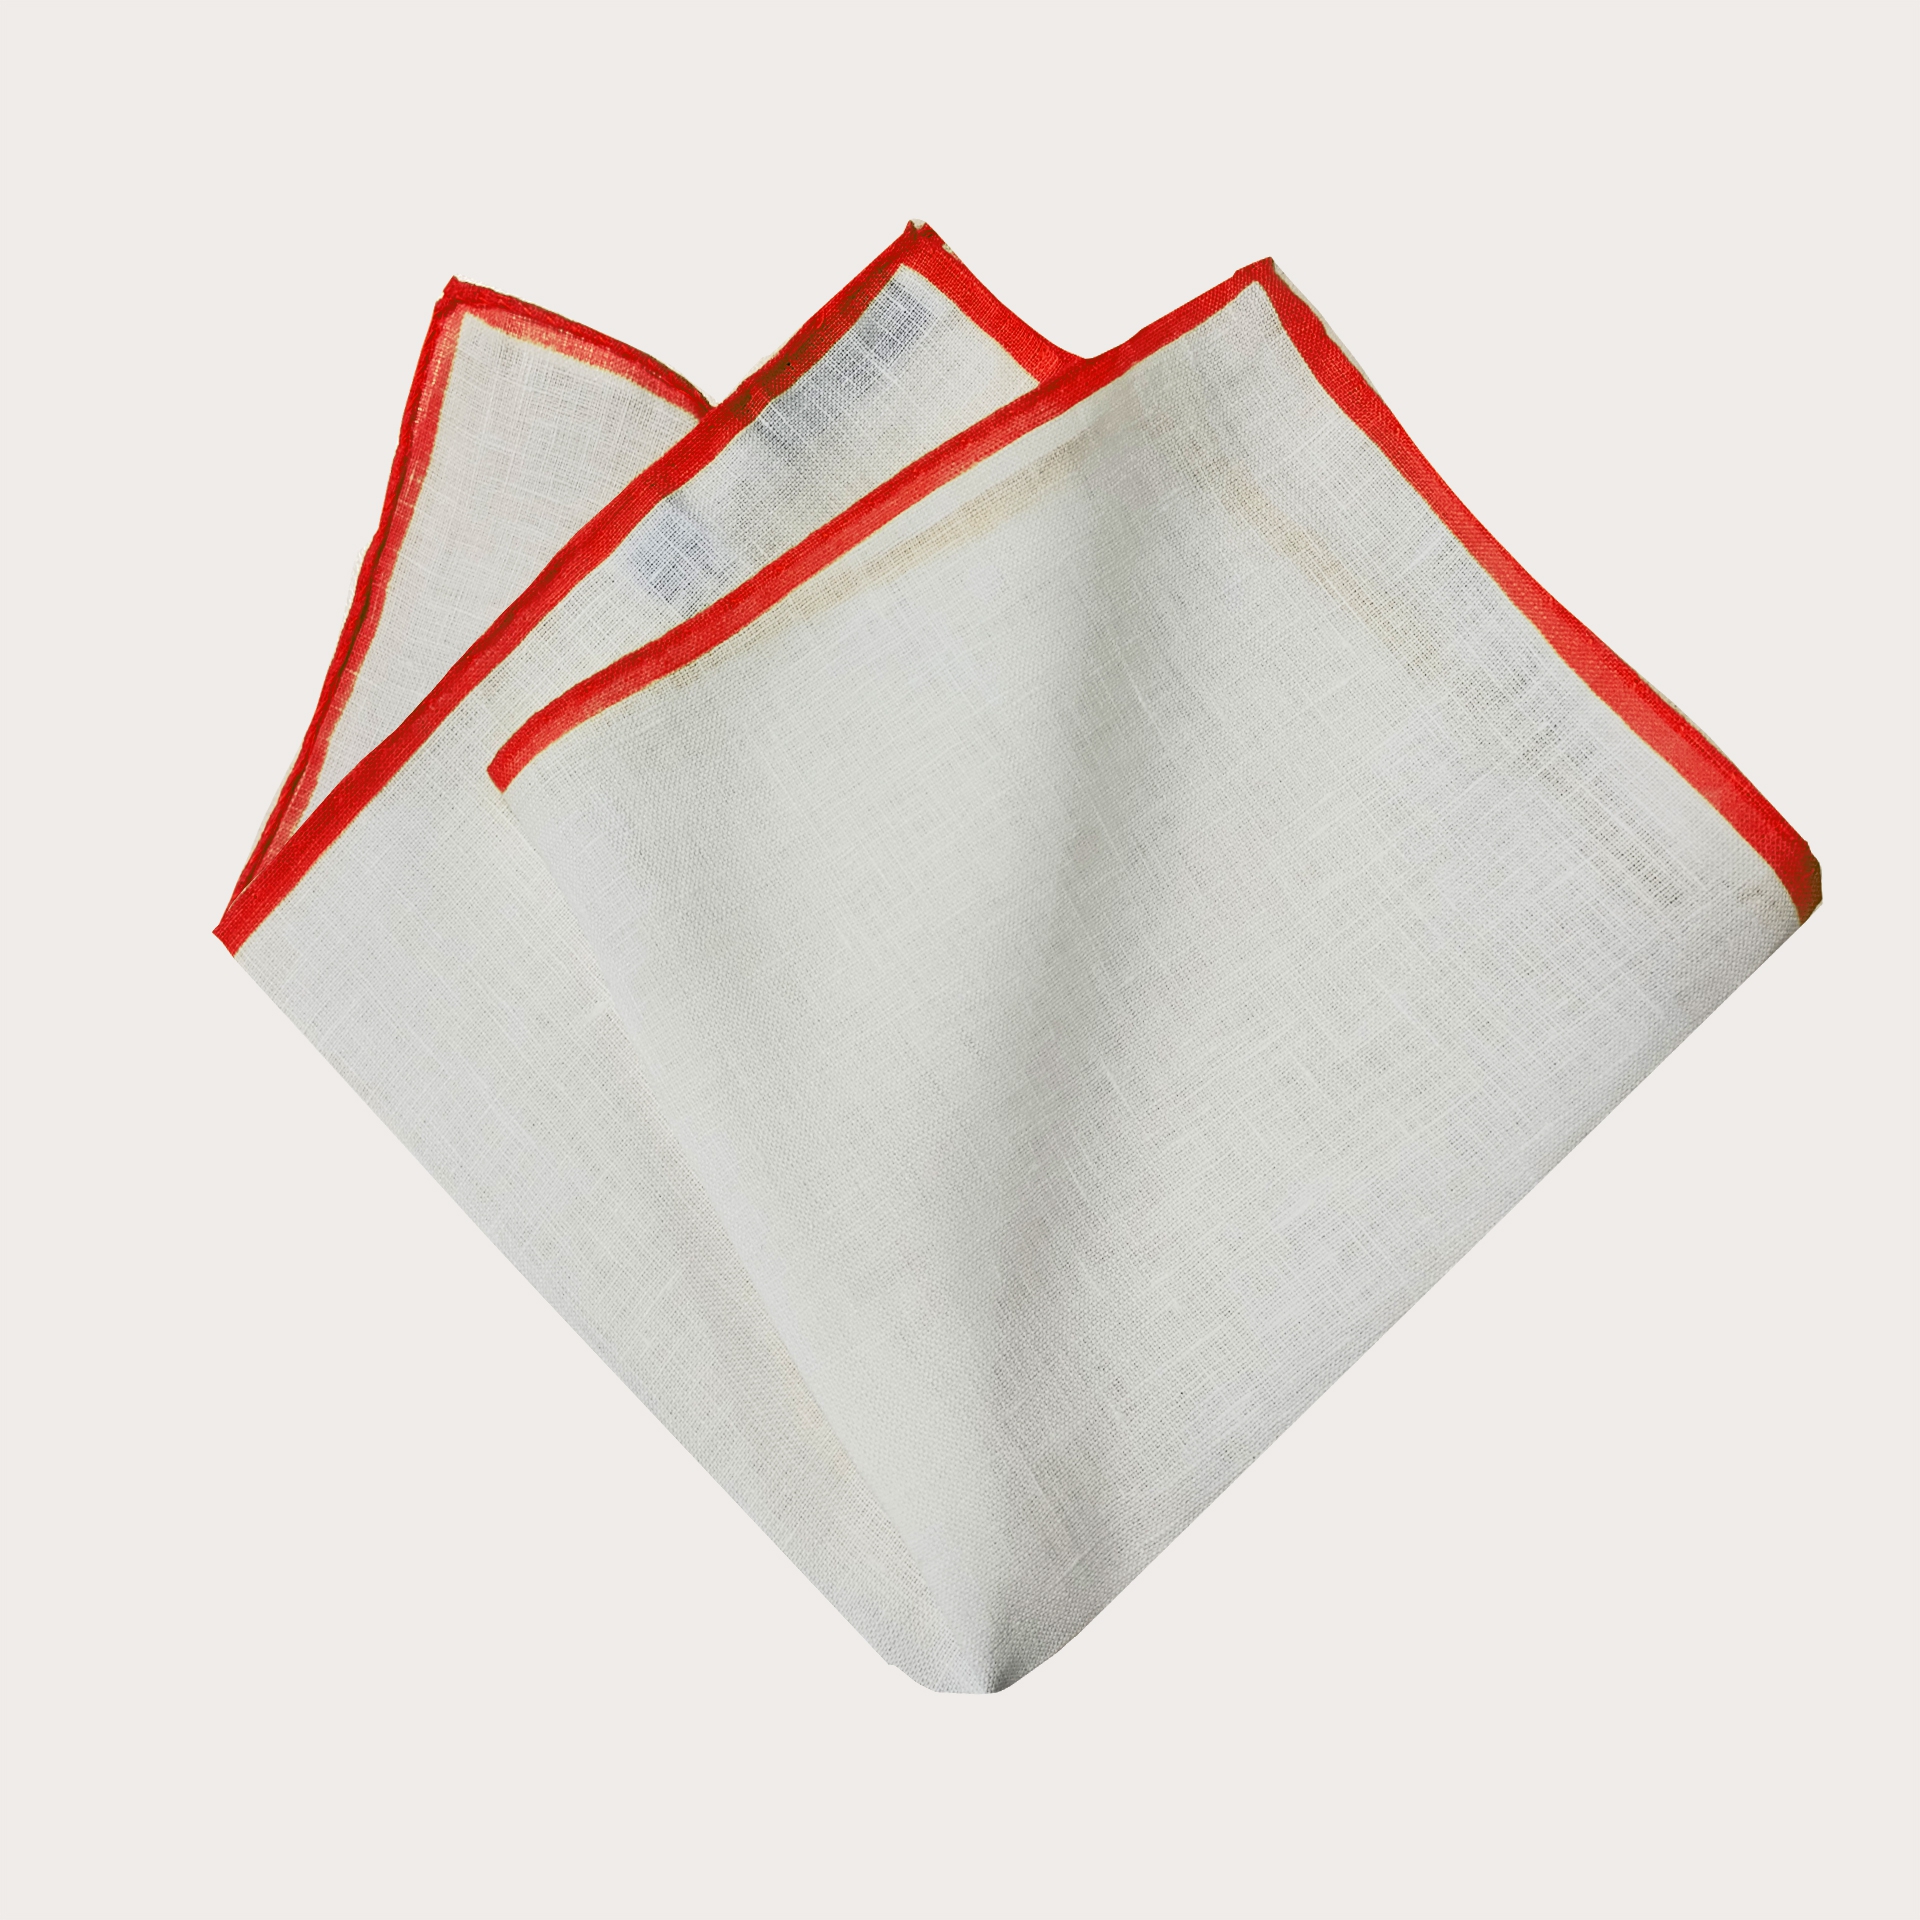 BRUCLE Pañuelo de bolsillo en lino, blanco con bordes rojos